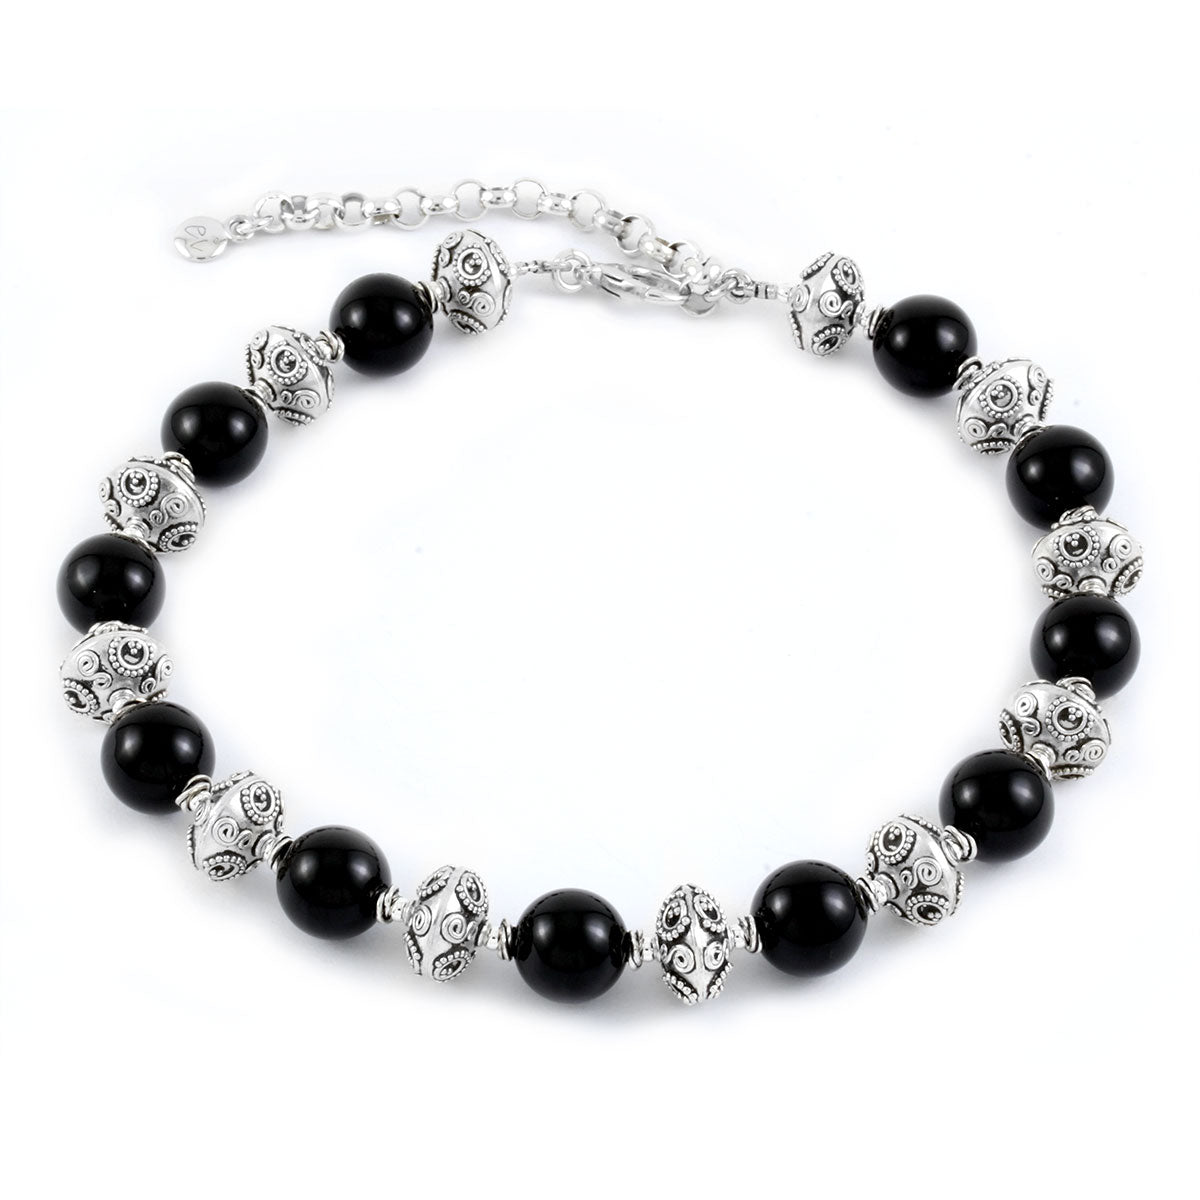 Black Agate Rolo Chain Necklace 235-472